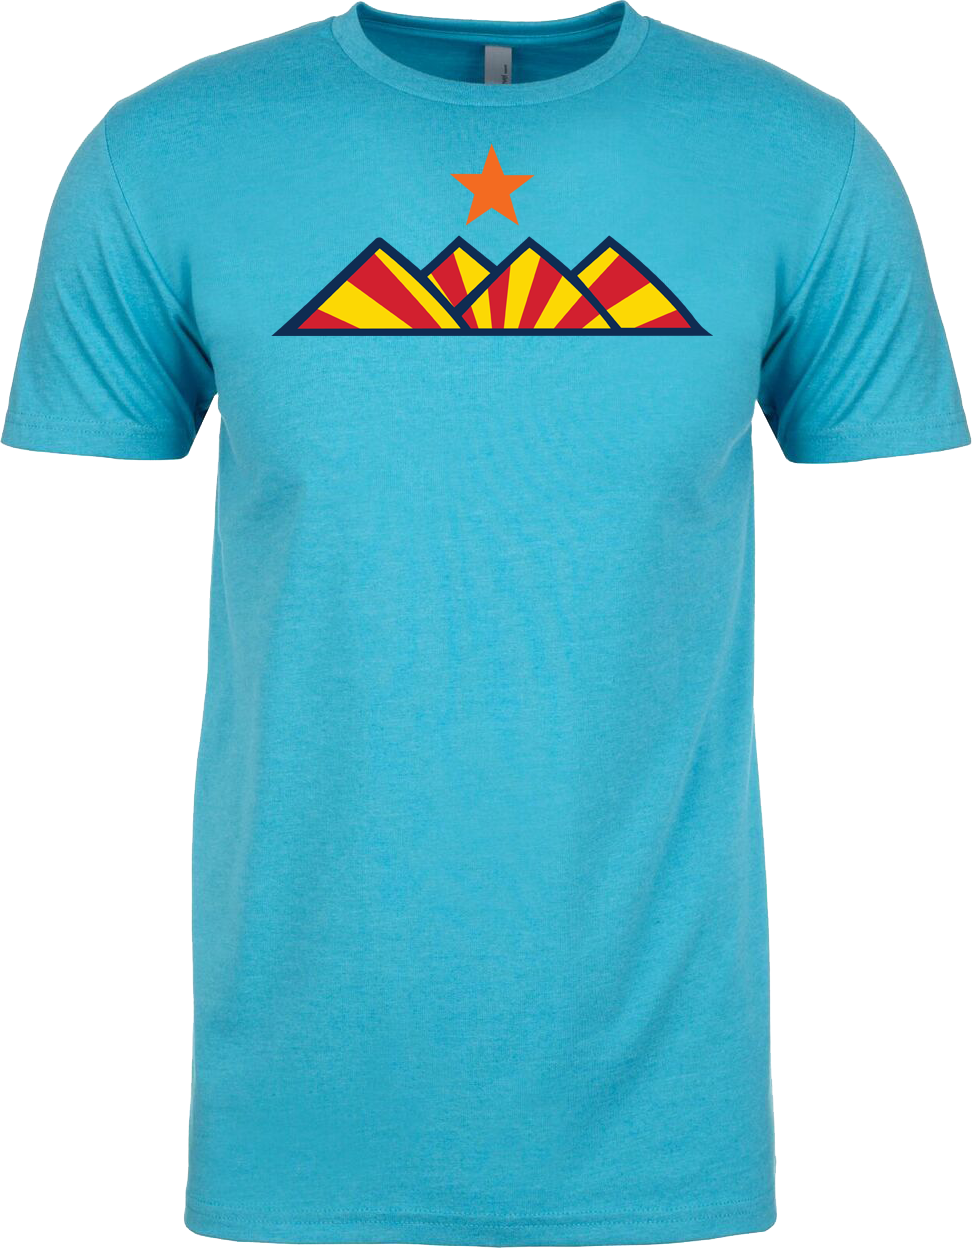 Hike Arizona Mens Shirt (Various Colors)